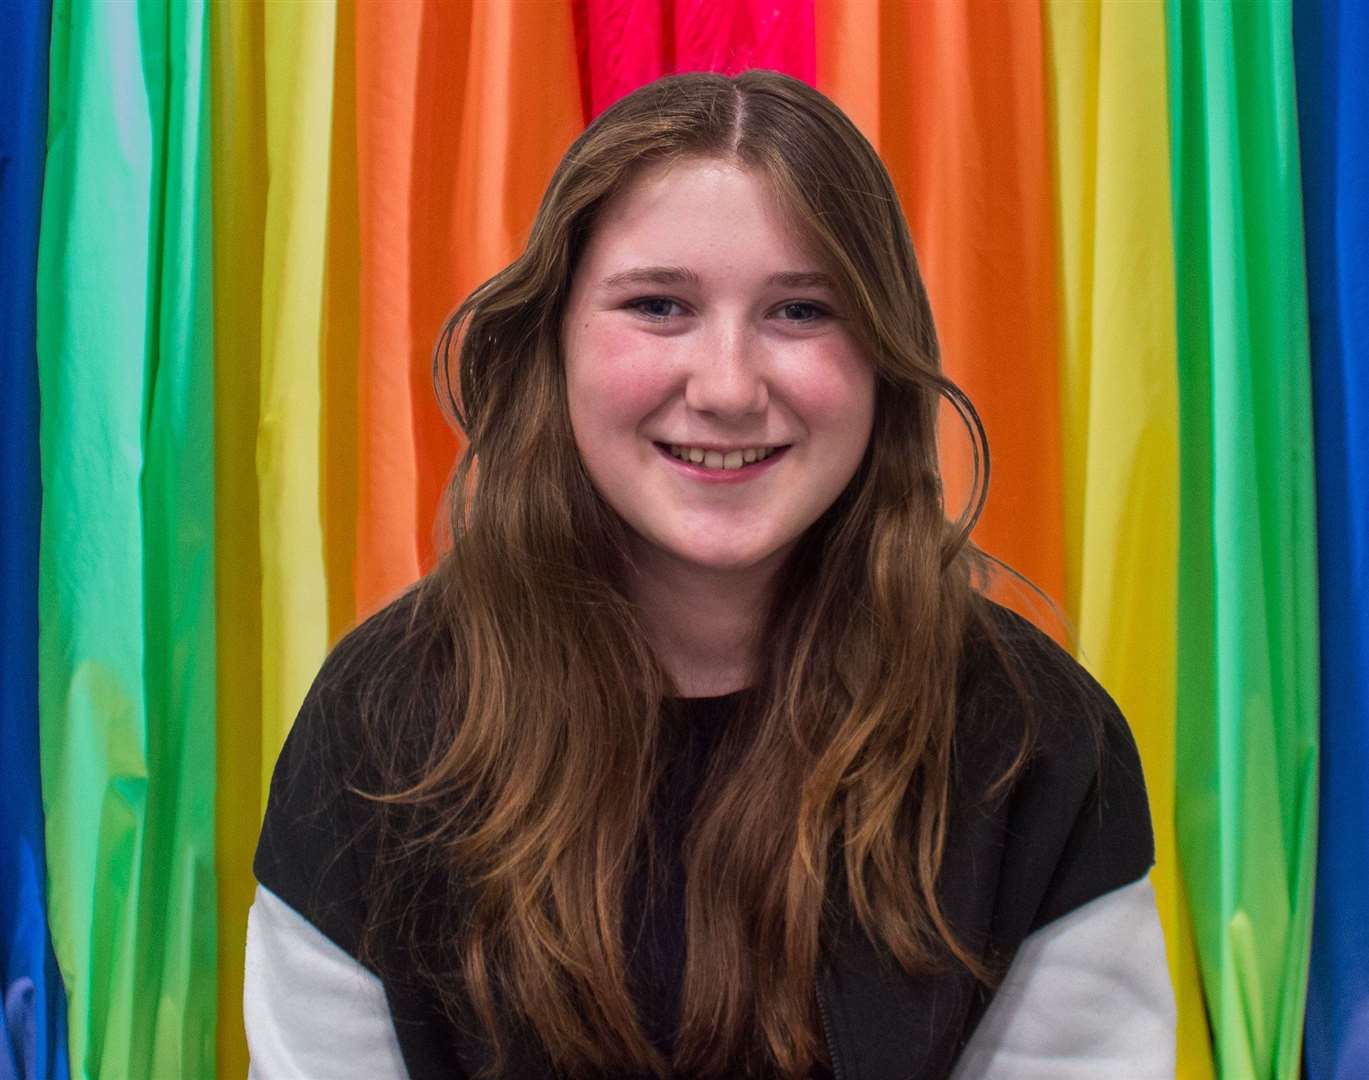 Maidstone Pride founder Kitty Eeles, 13